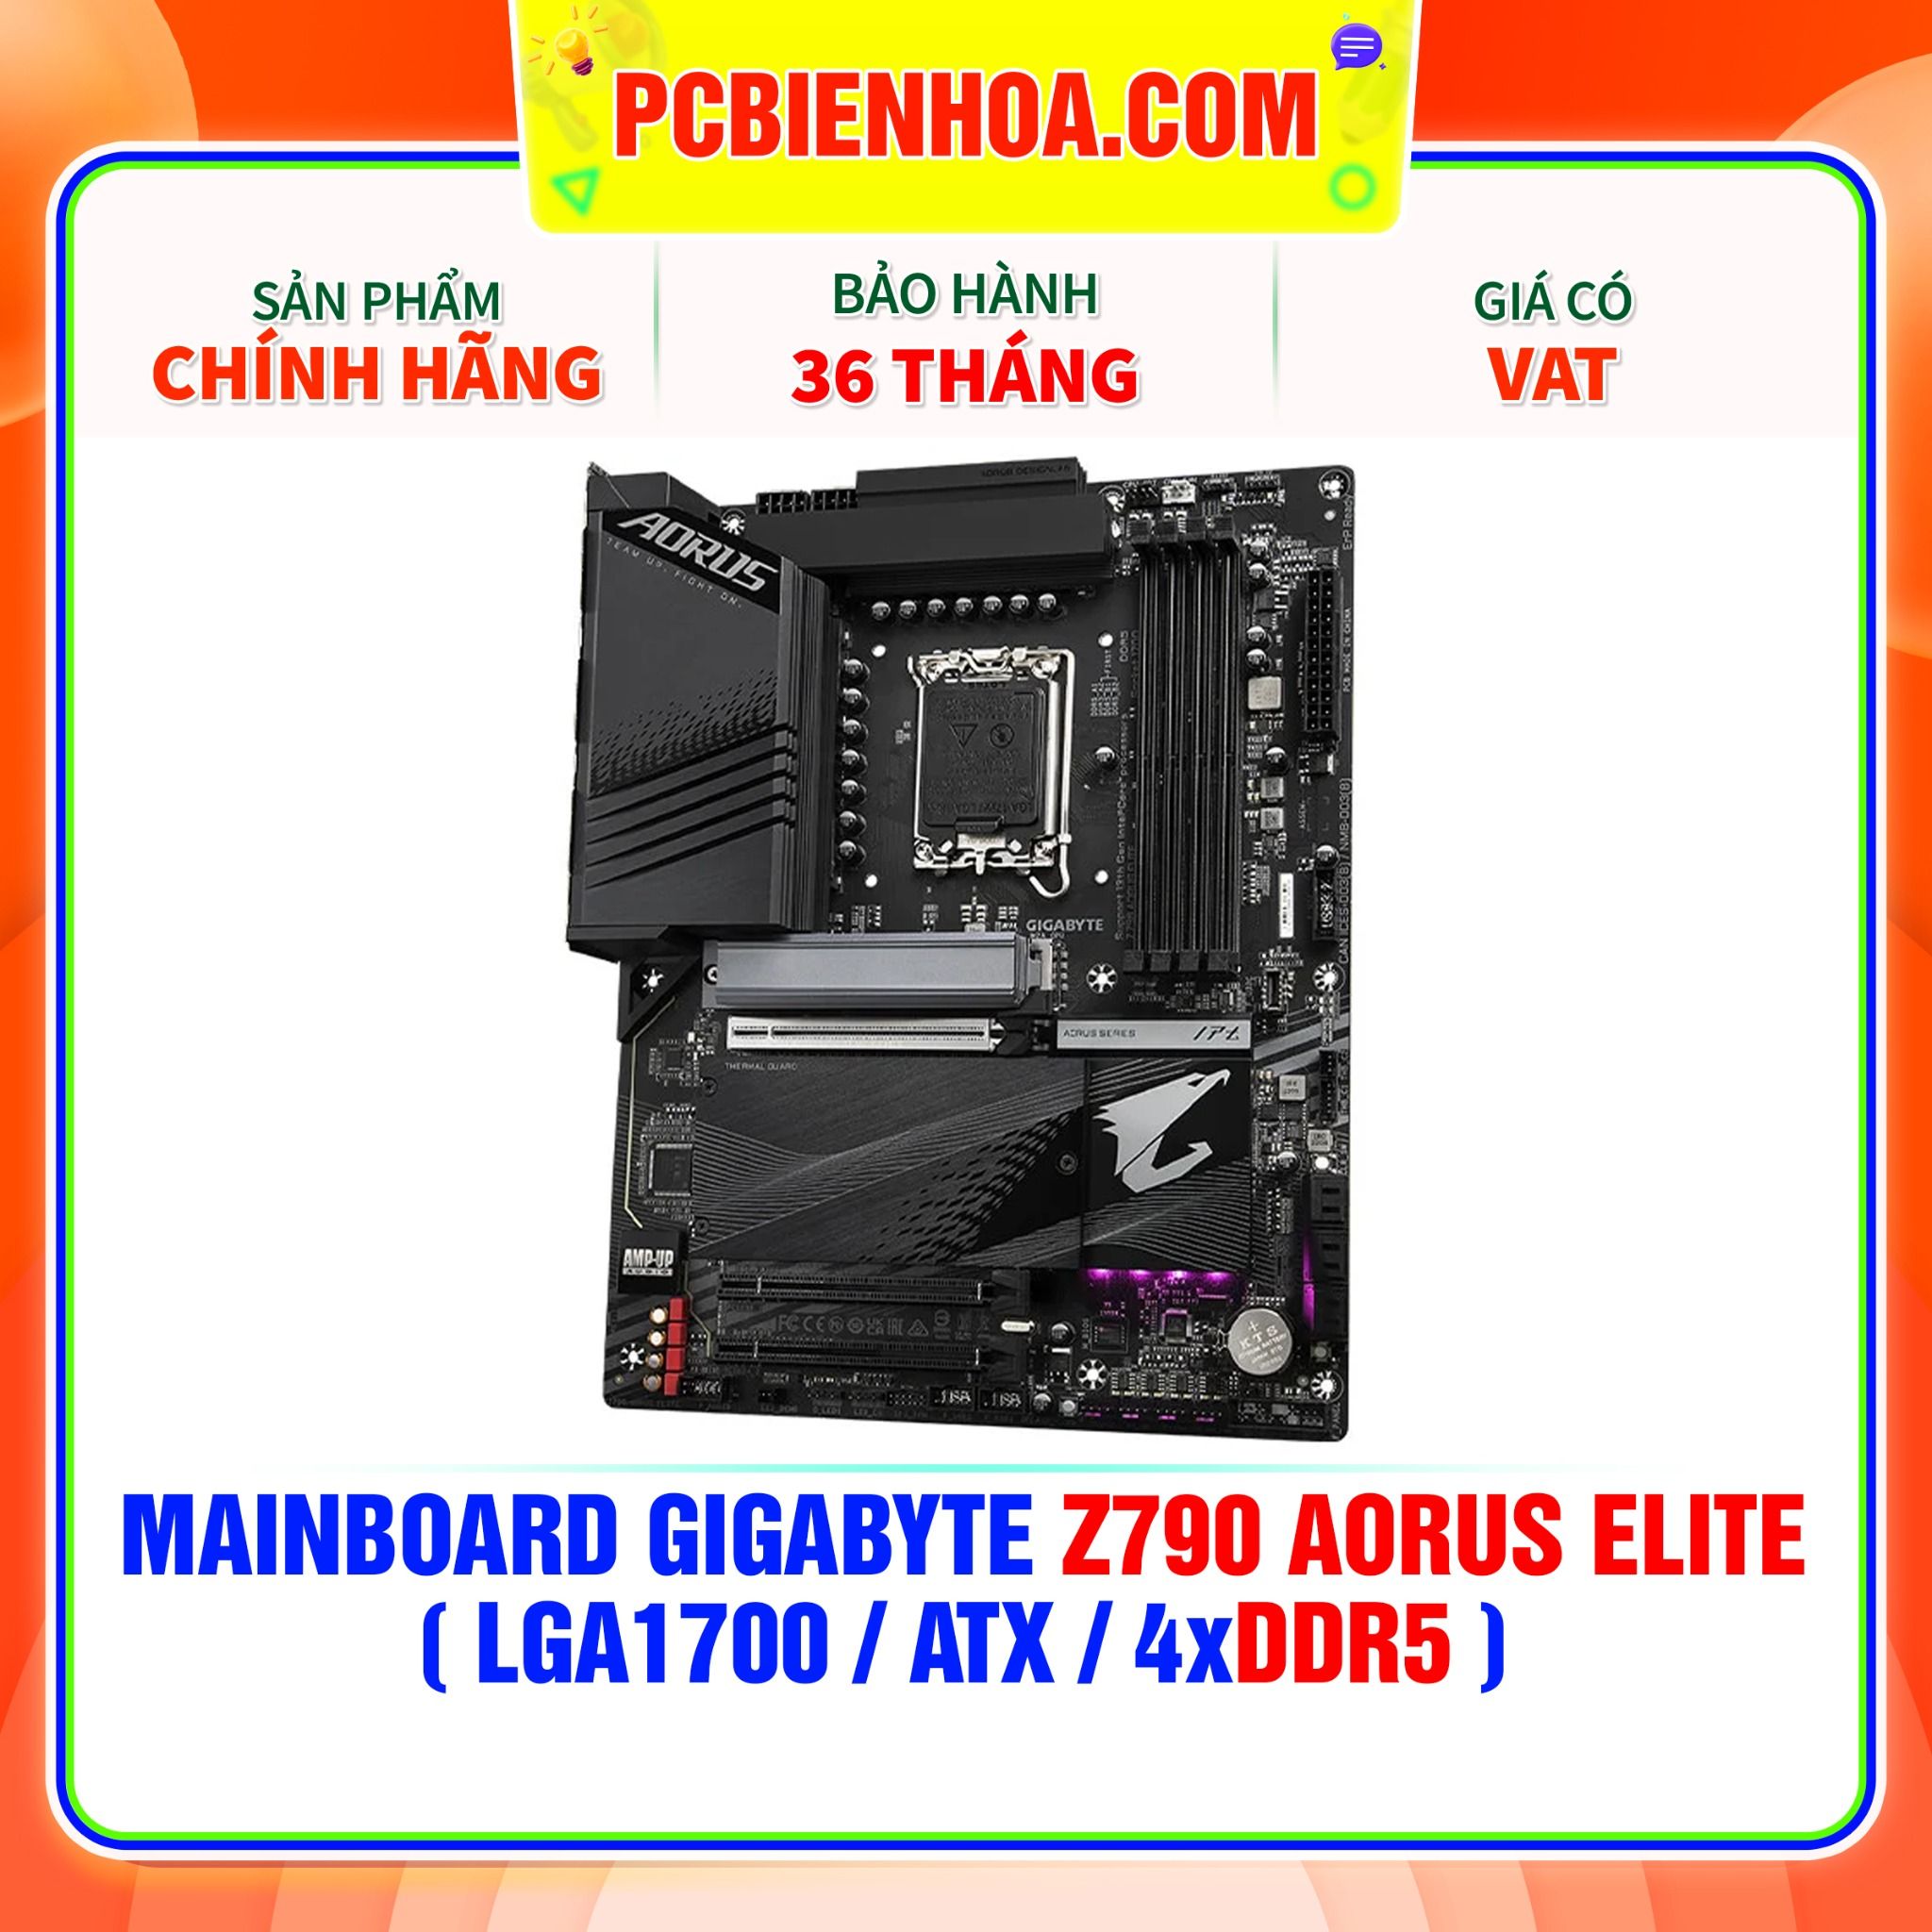  DDR5 - MAINBOARD GIGABYTE Z790 AORUS ELITE ( LGA1700 / ATX / 4xDDR5 ) 